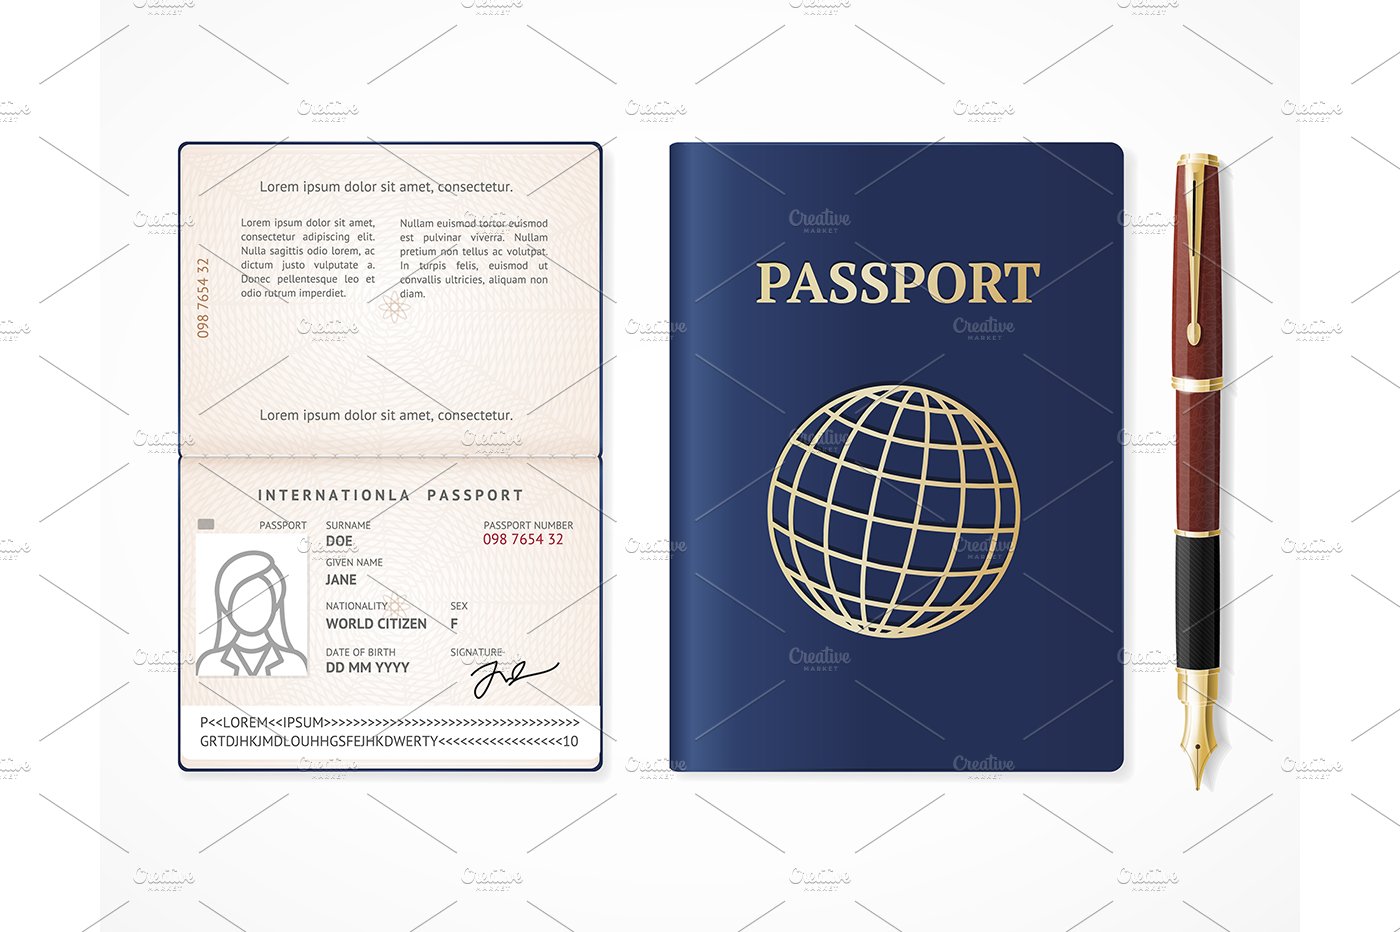 International Passport Blank Set. preview image.